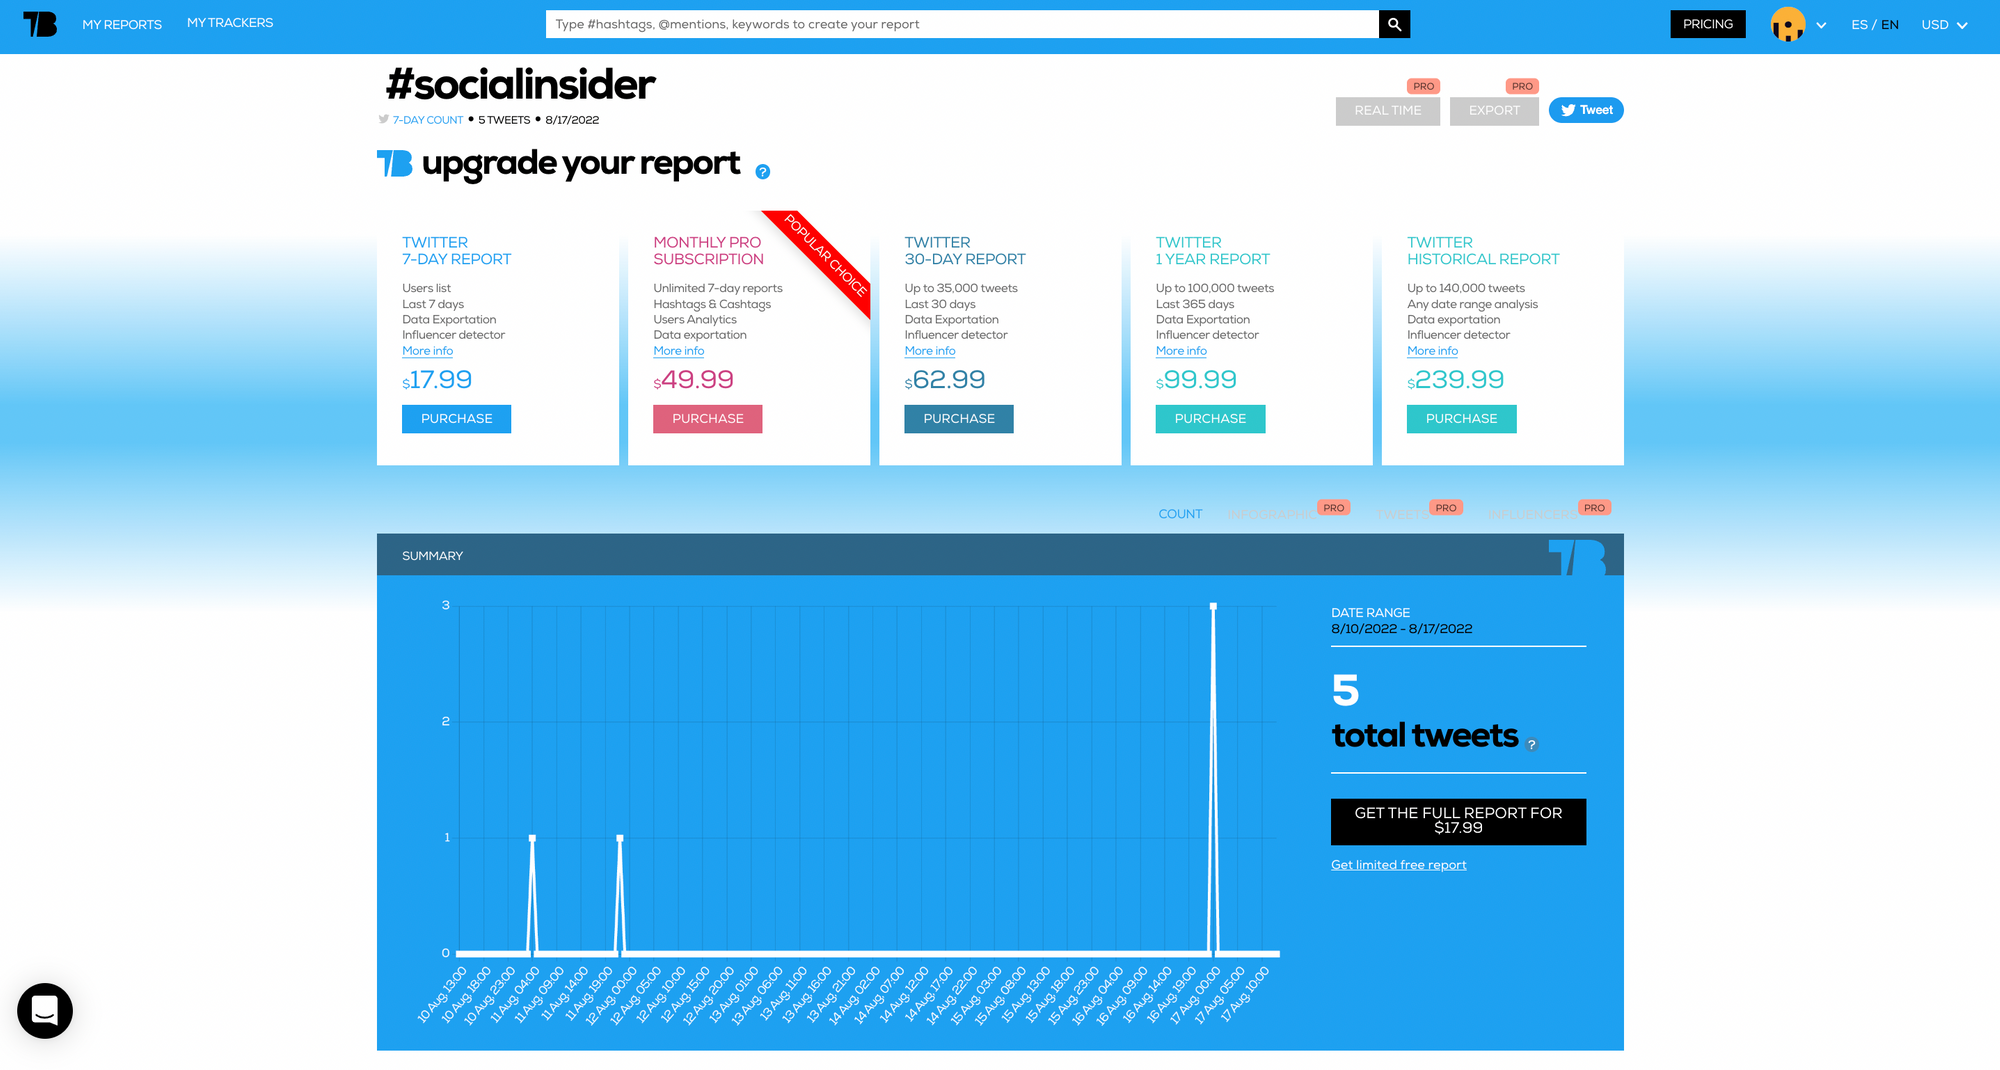 Tweet-binder tool for Twitter analytics